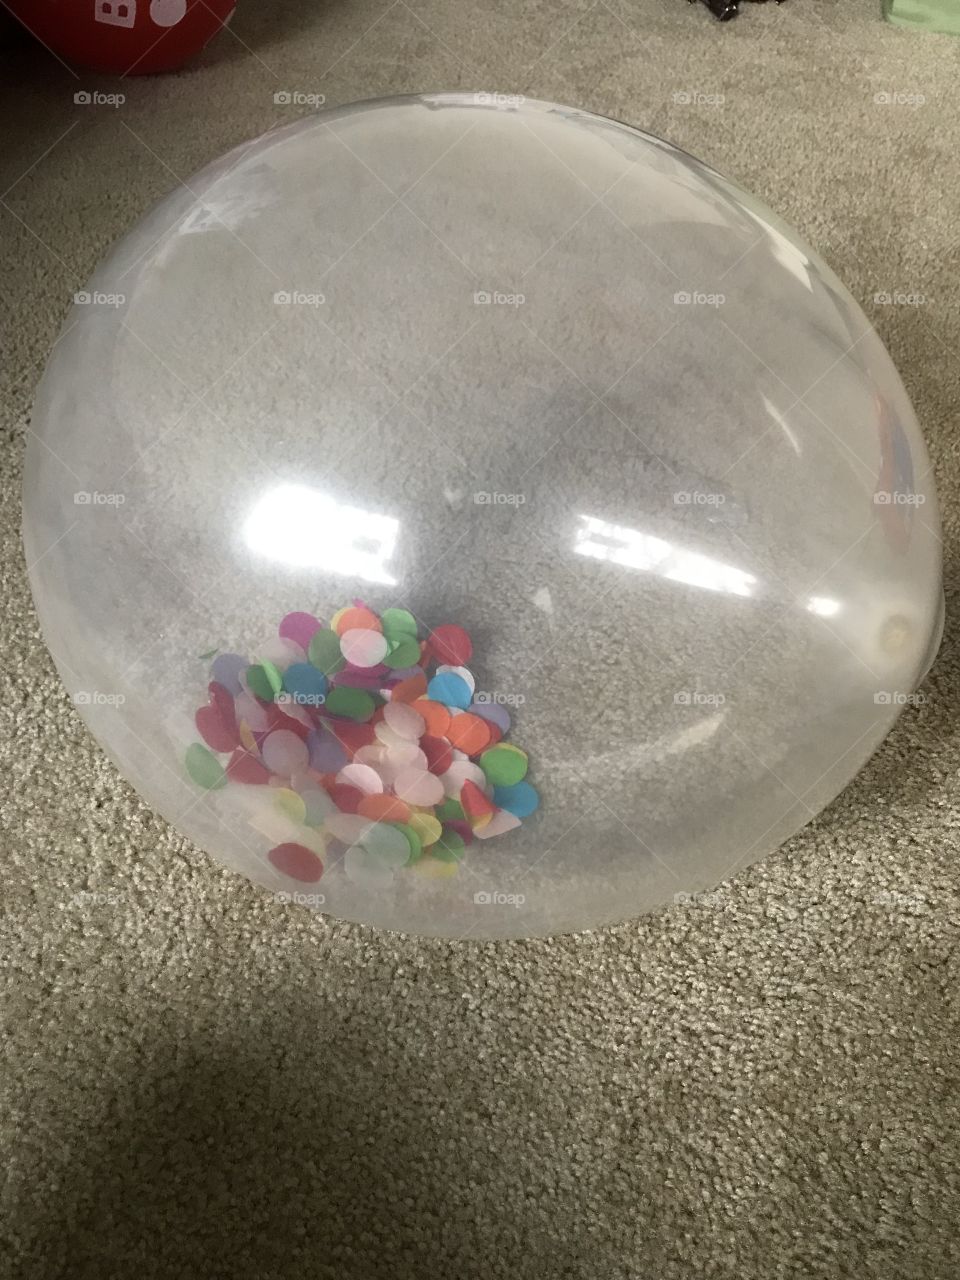 Ballon and colorful paper